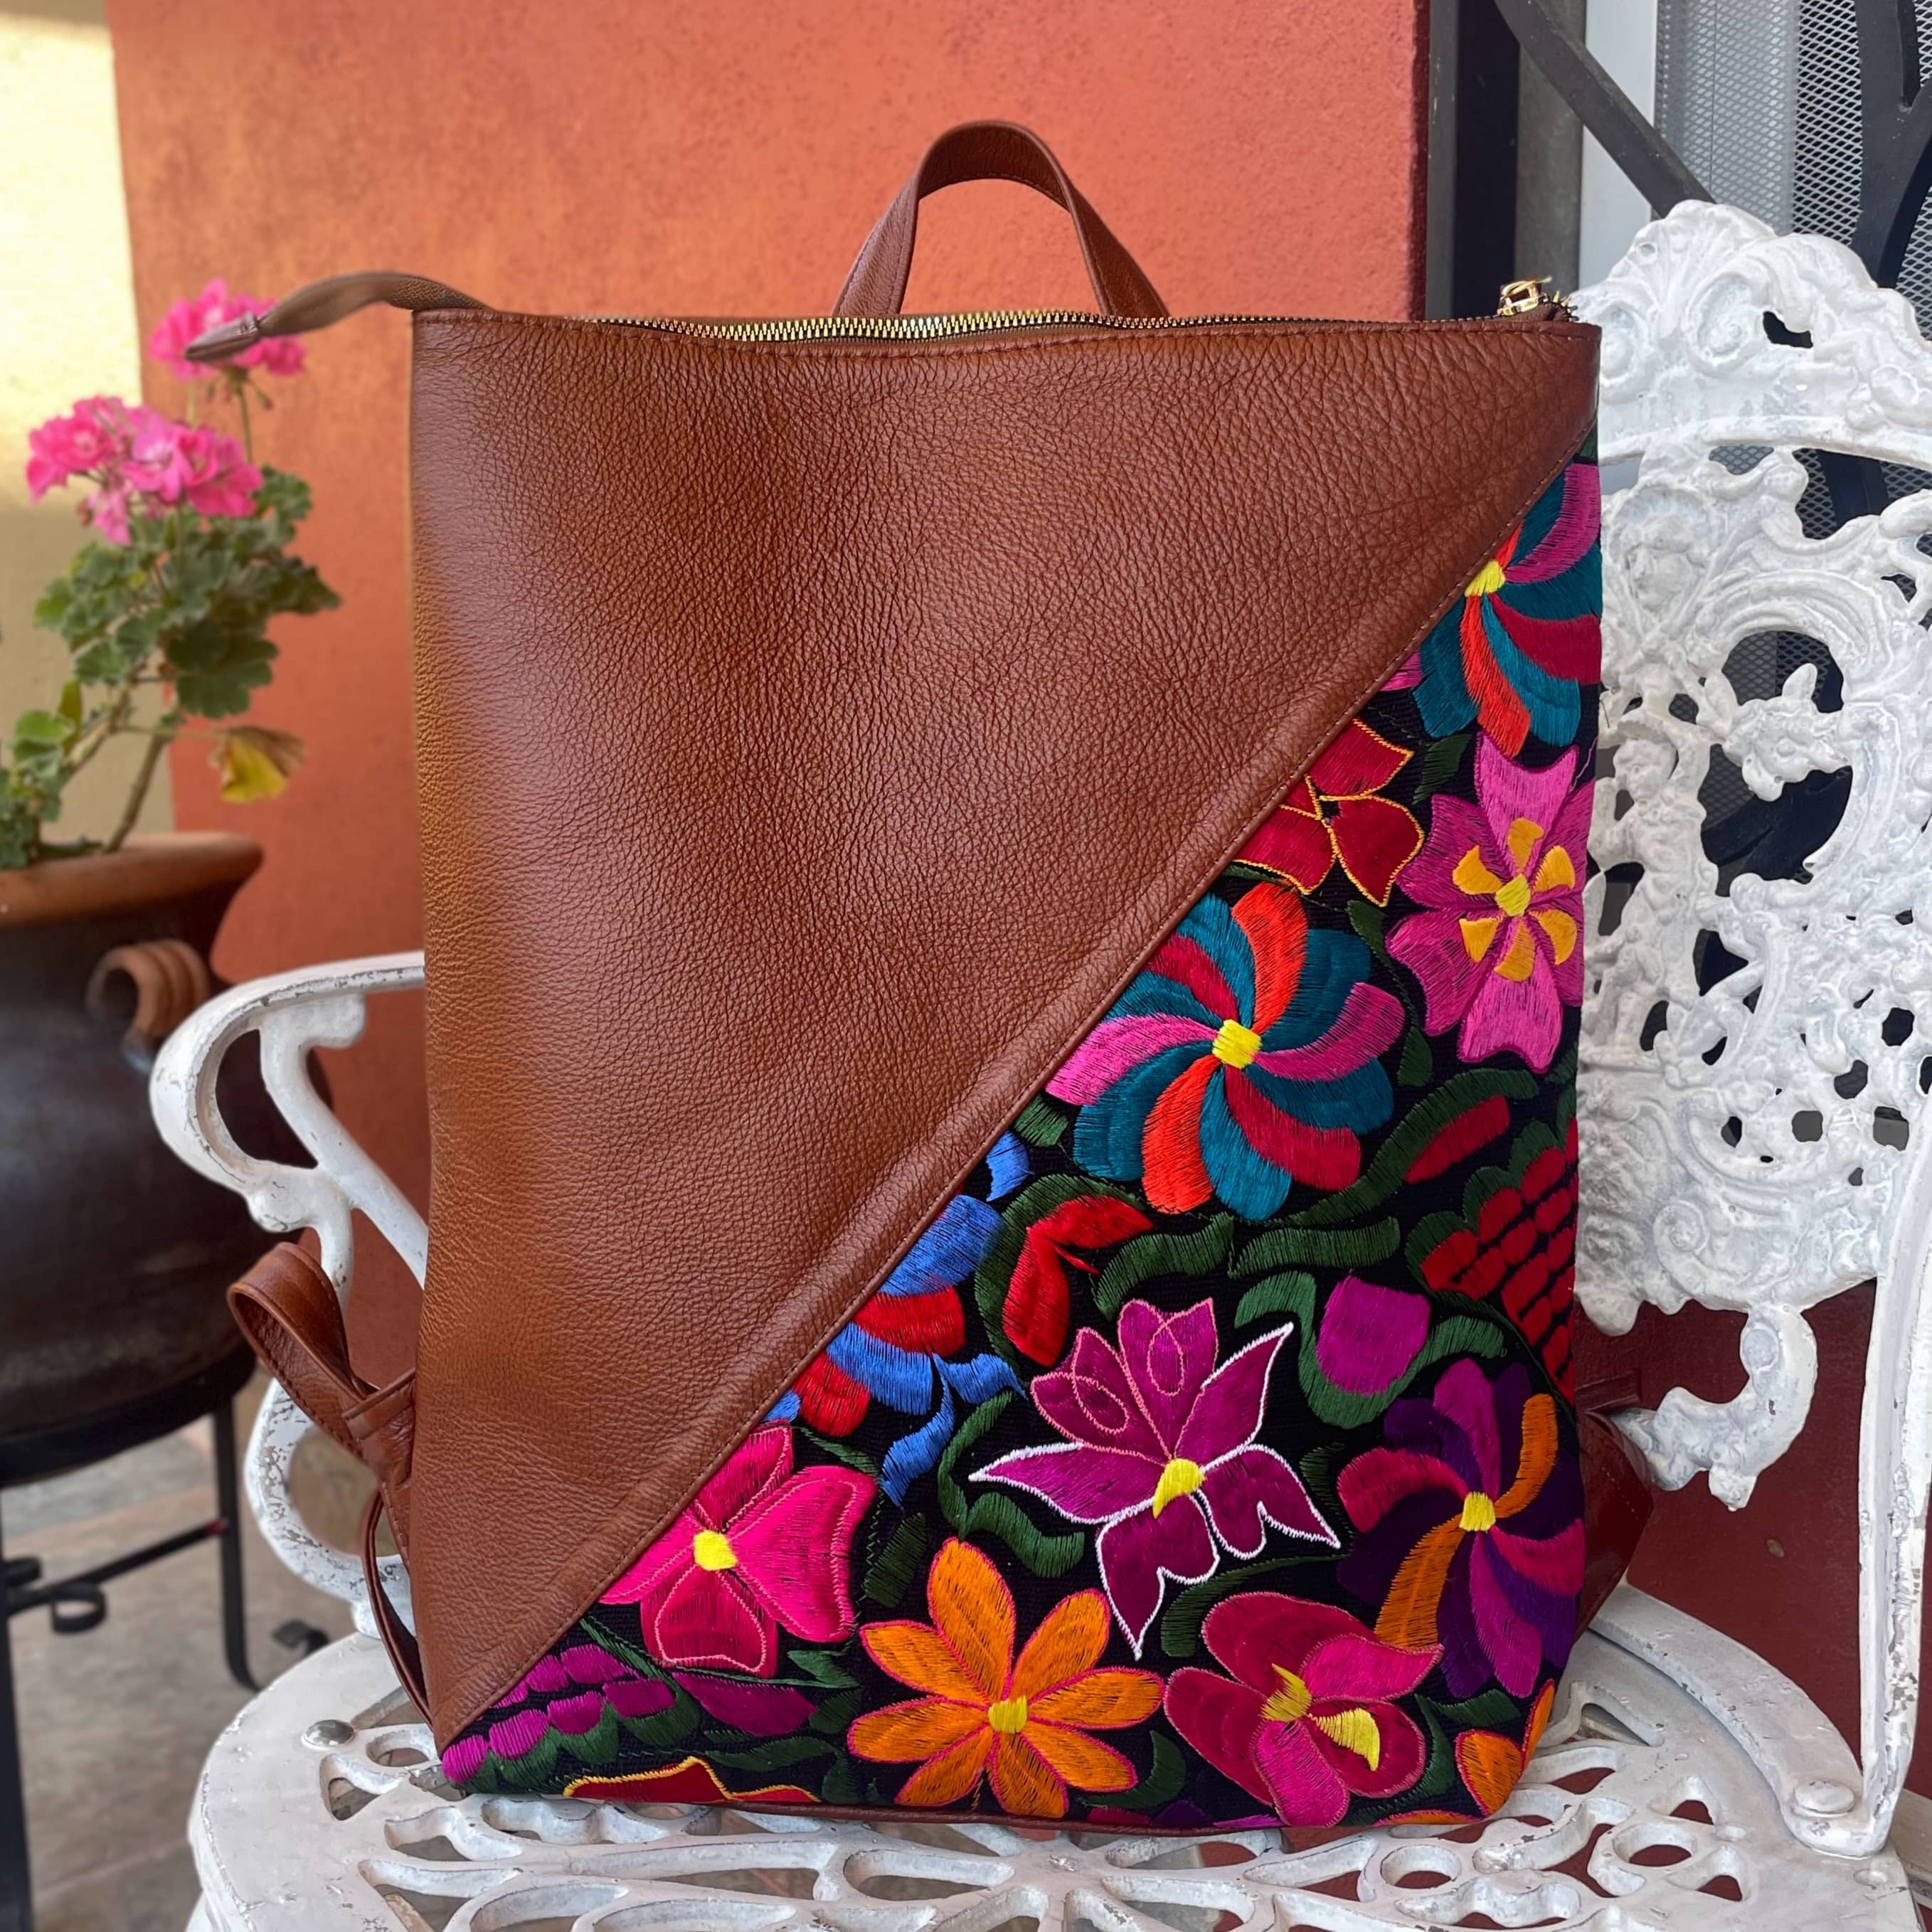 Mexican Bag Floral Embroidery Women's Crossbody Bag Handmade | eBay